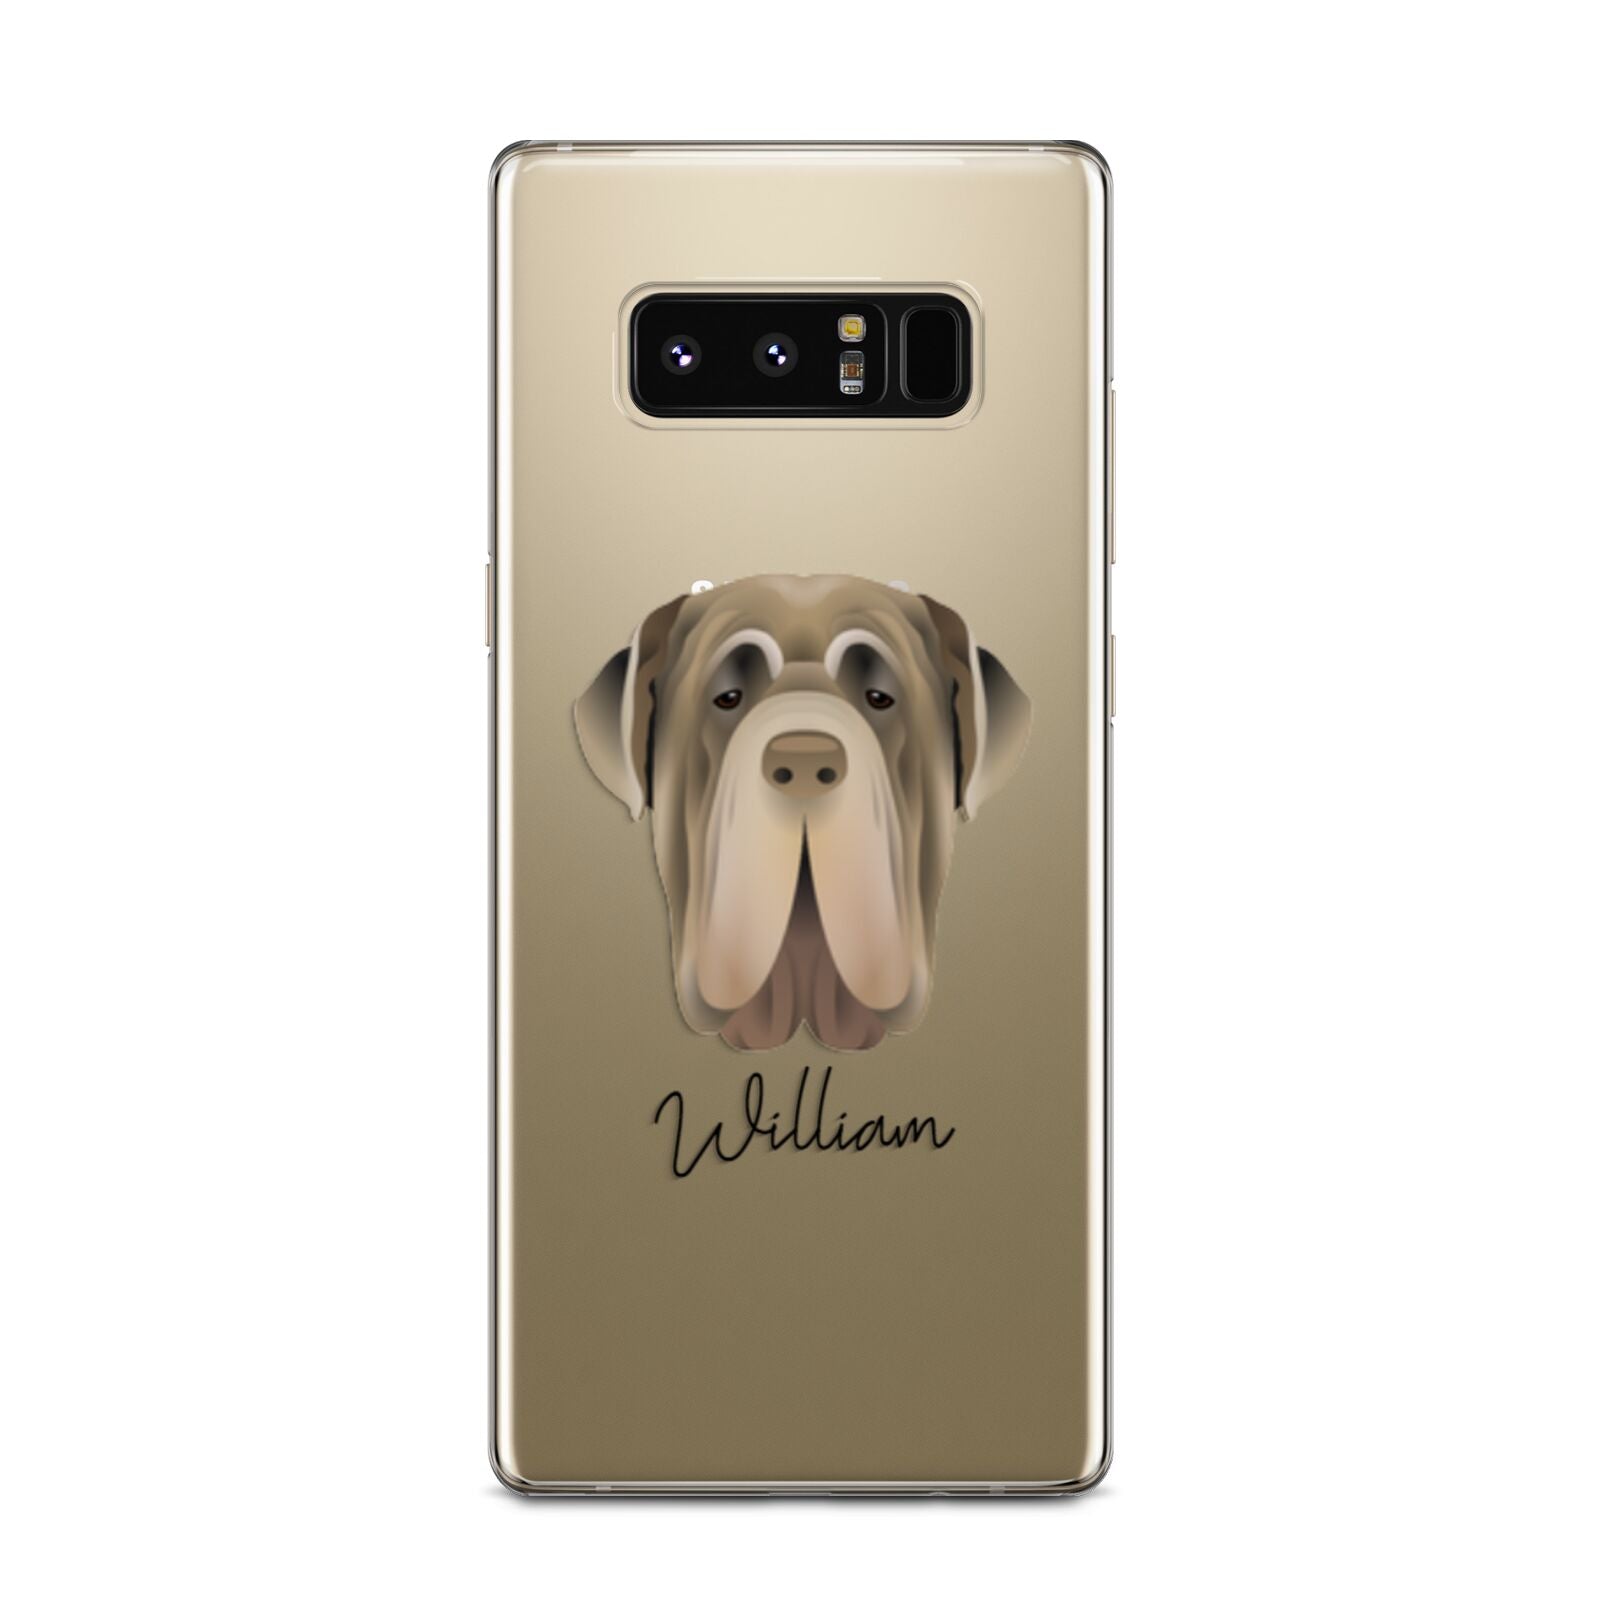 Neapolitan Mastiff Personalised Samsung Galaxy Note 8 Case